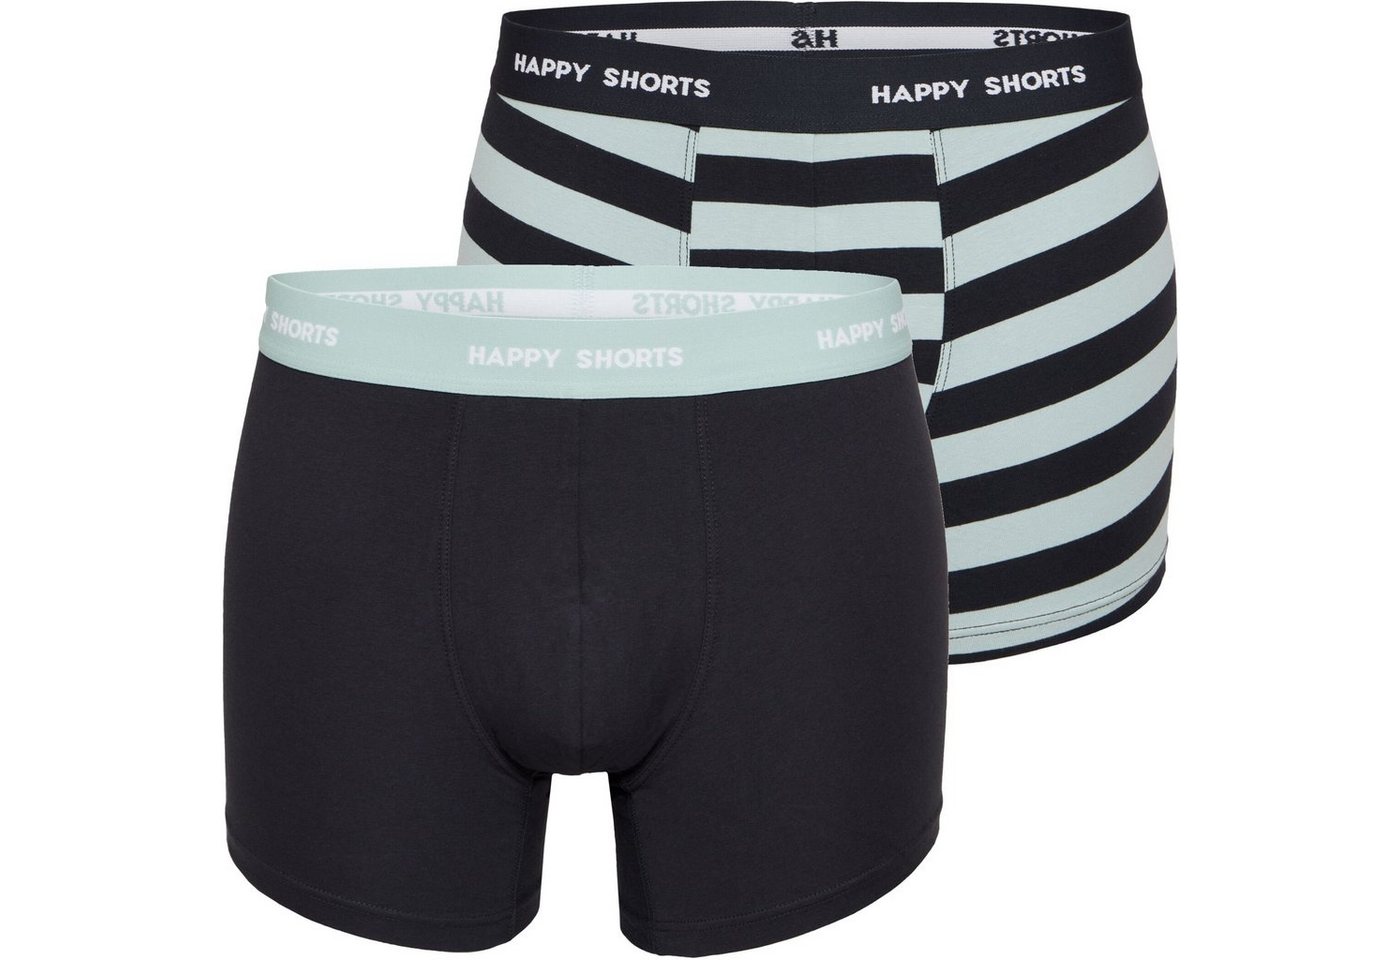 HAPPY SHORTS Trunk 2 Happy Shorts Jersey Trunk Herren Boxershort Boxer Pant Minz Streifen (1-St) von HAPPY SHORTS